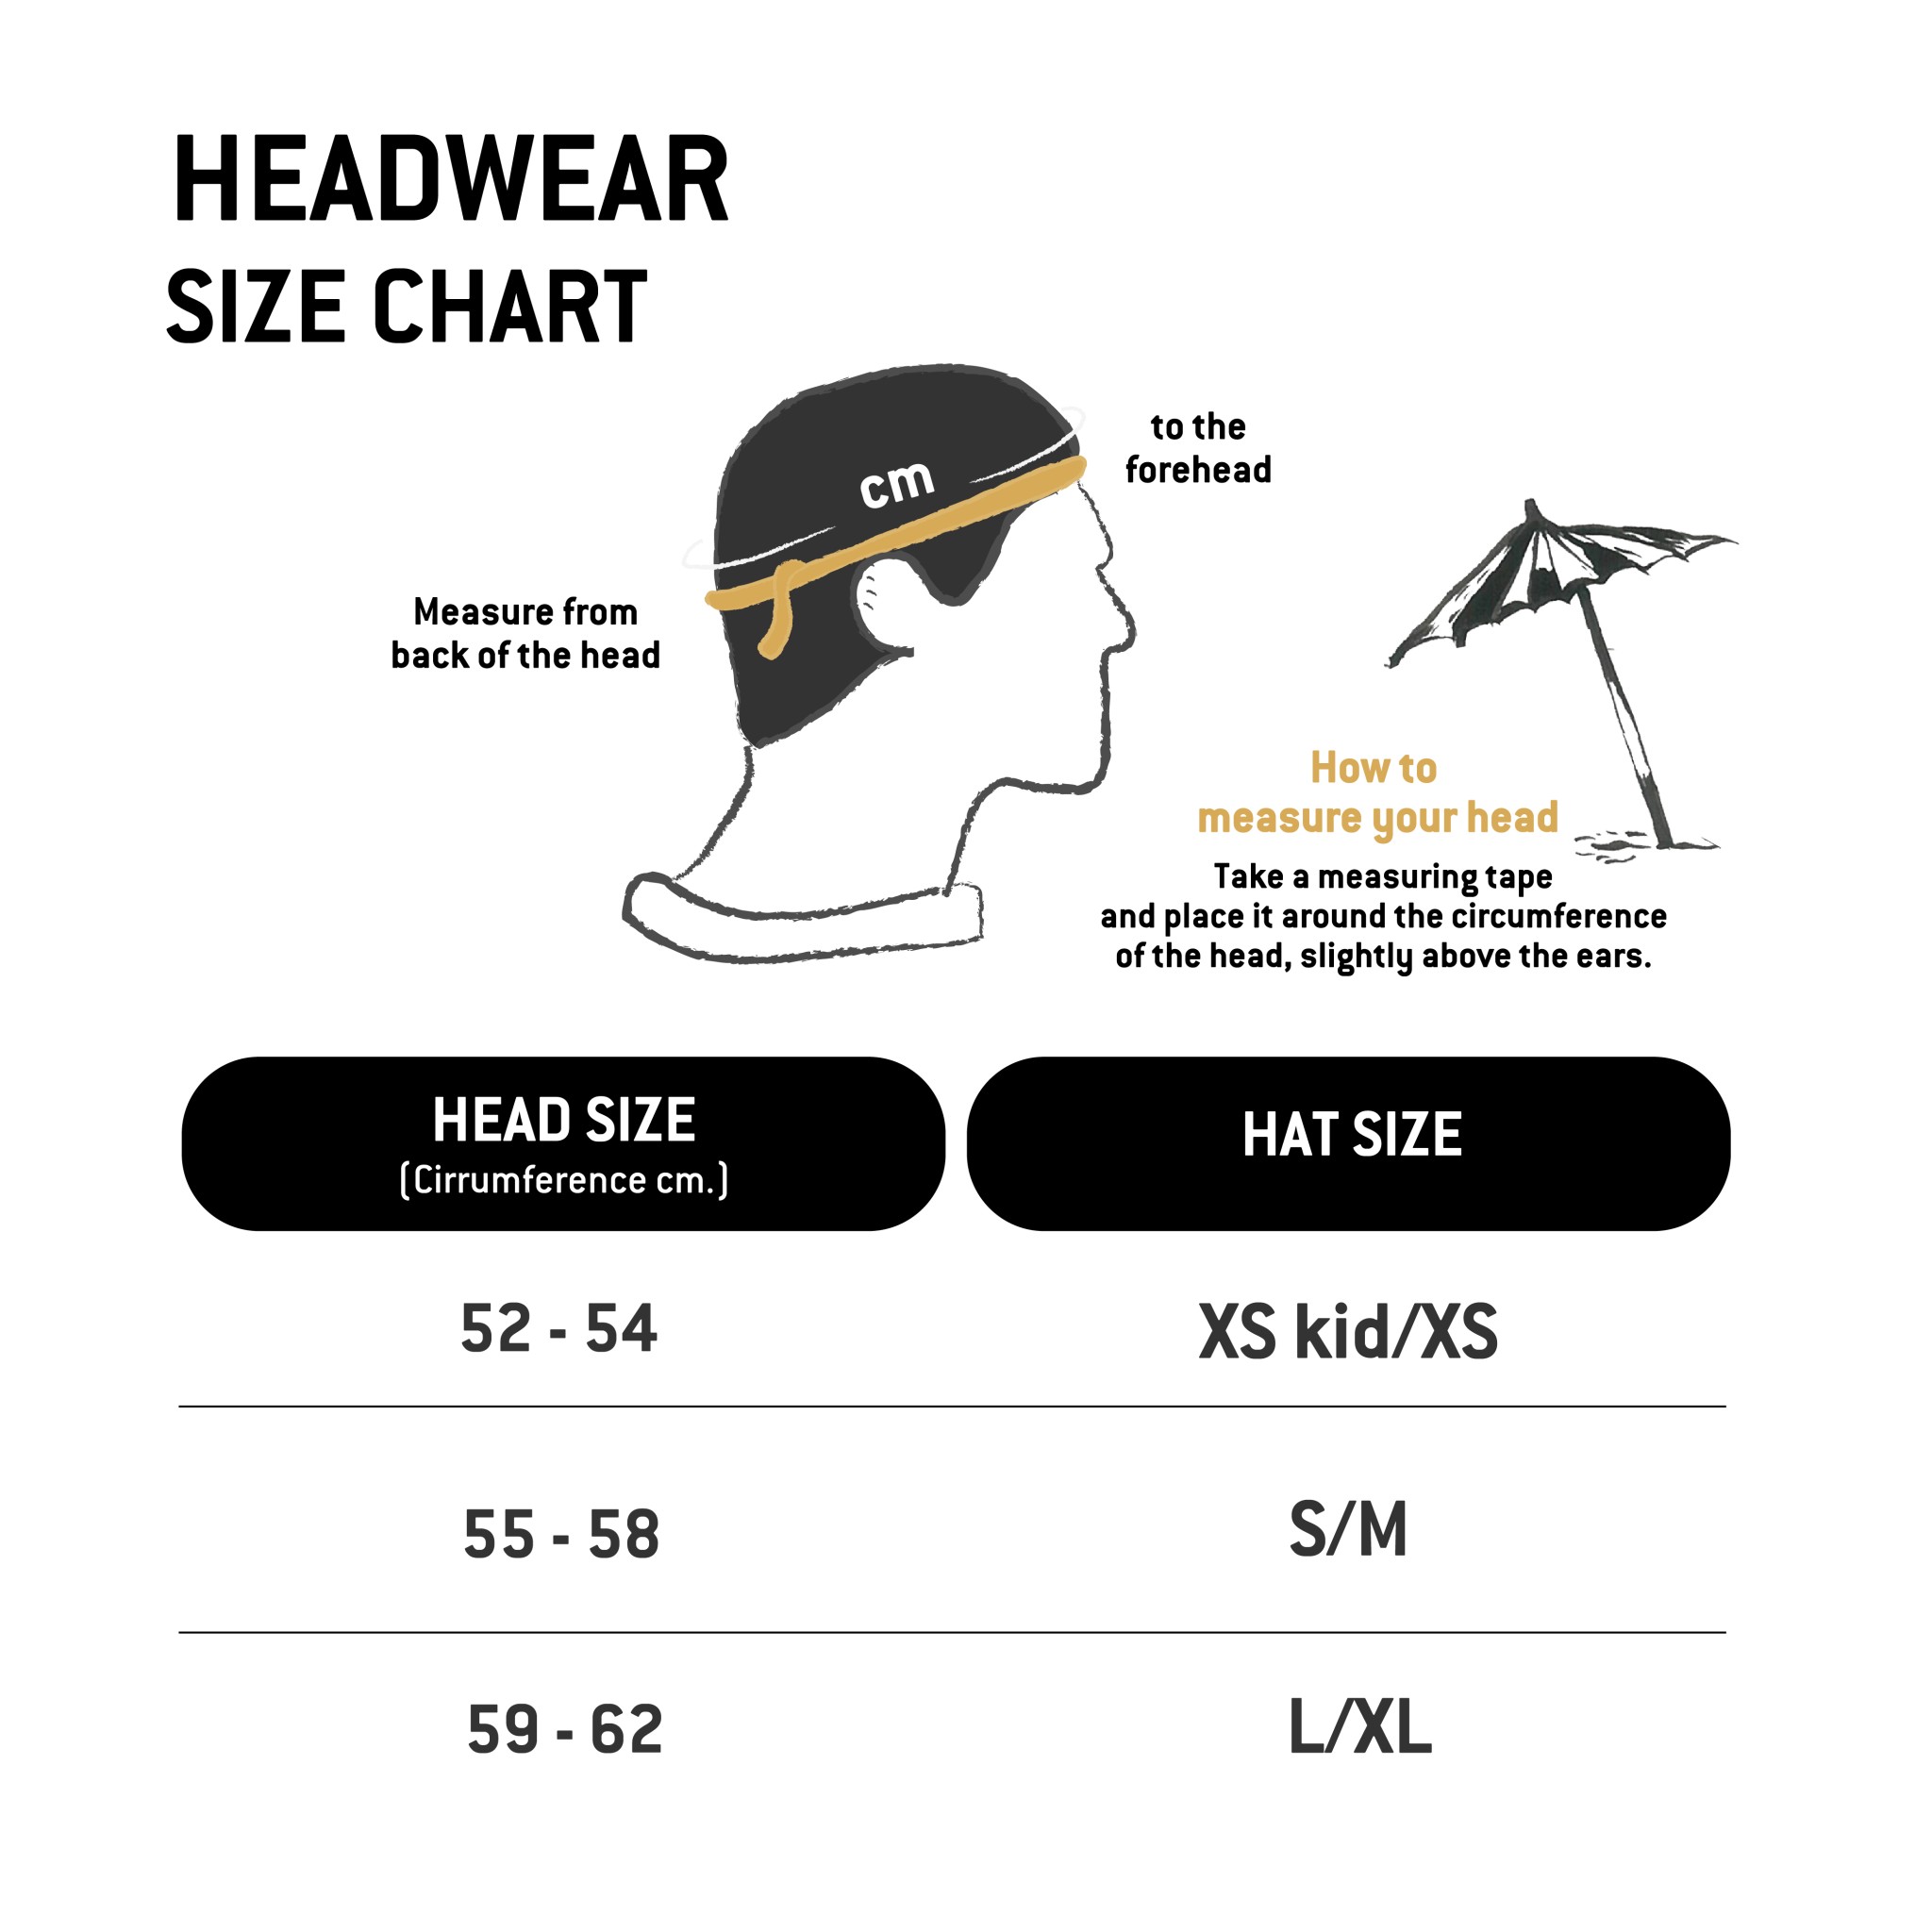 Headware size chart